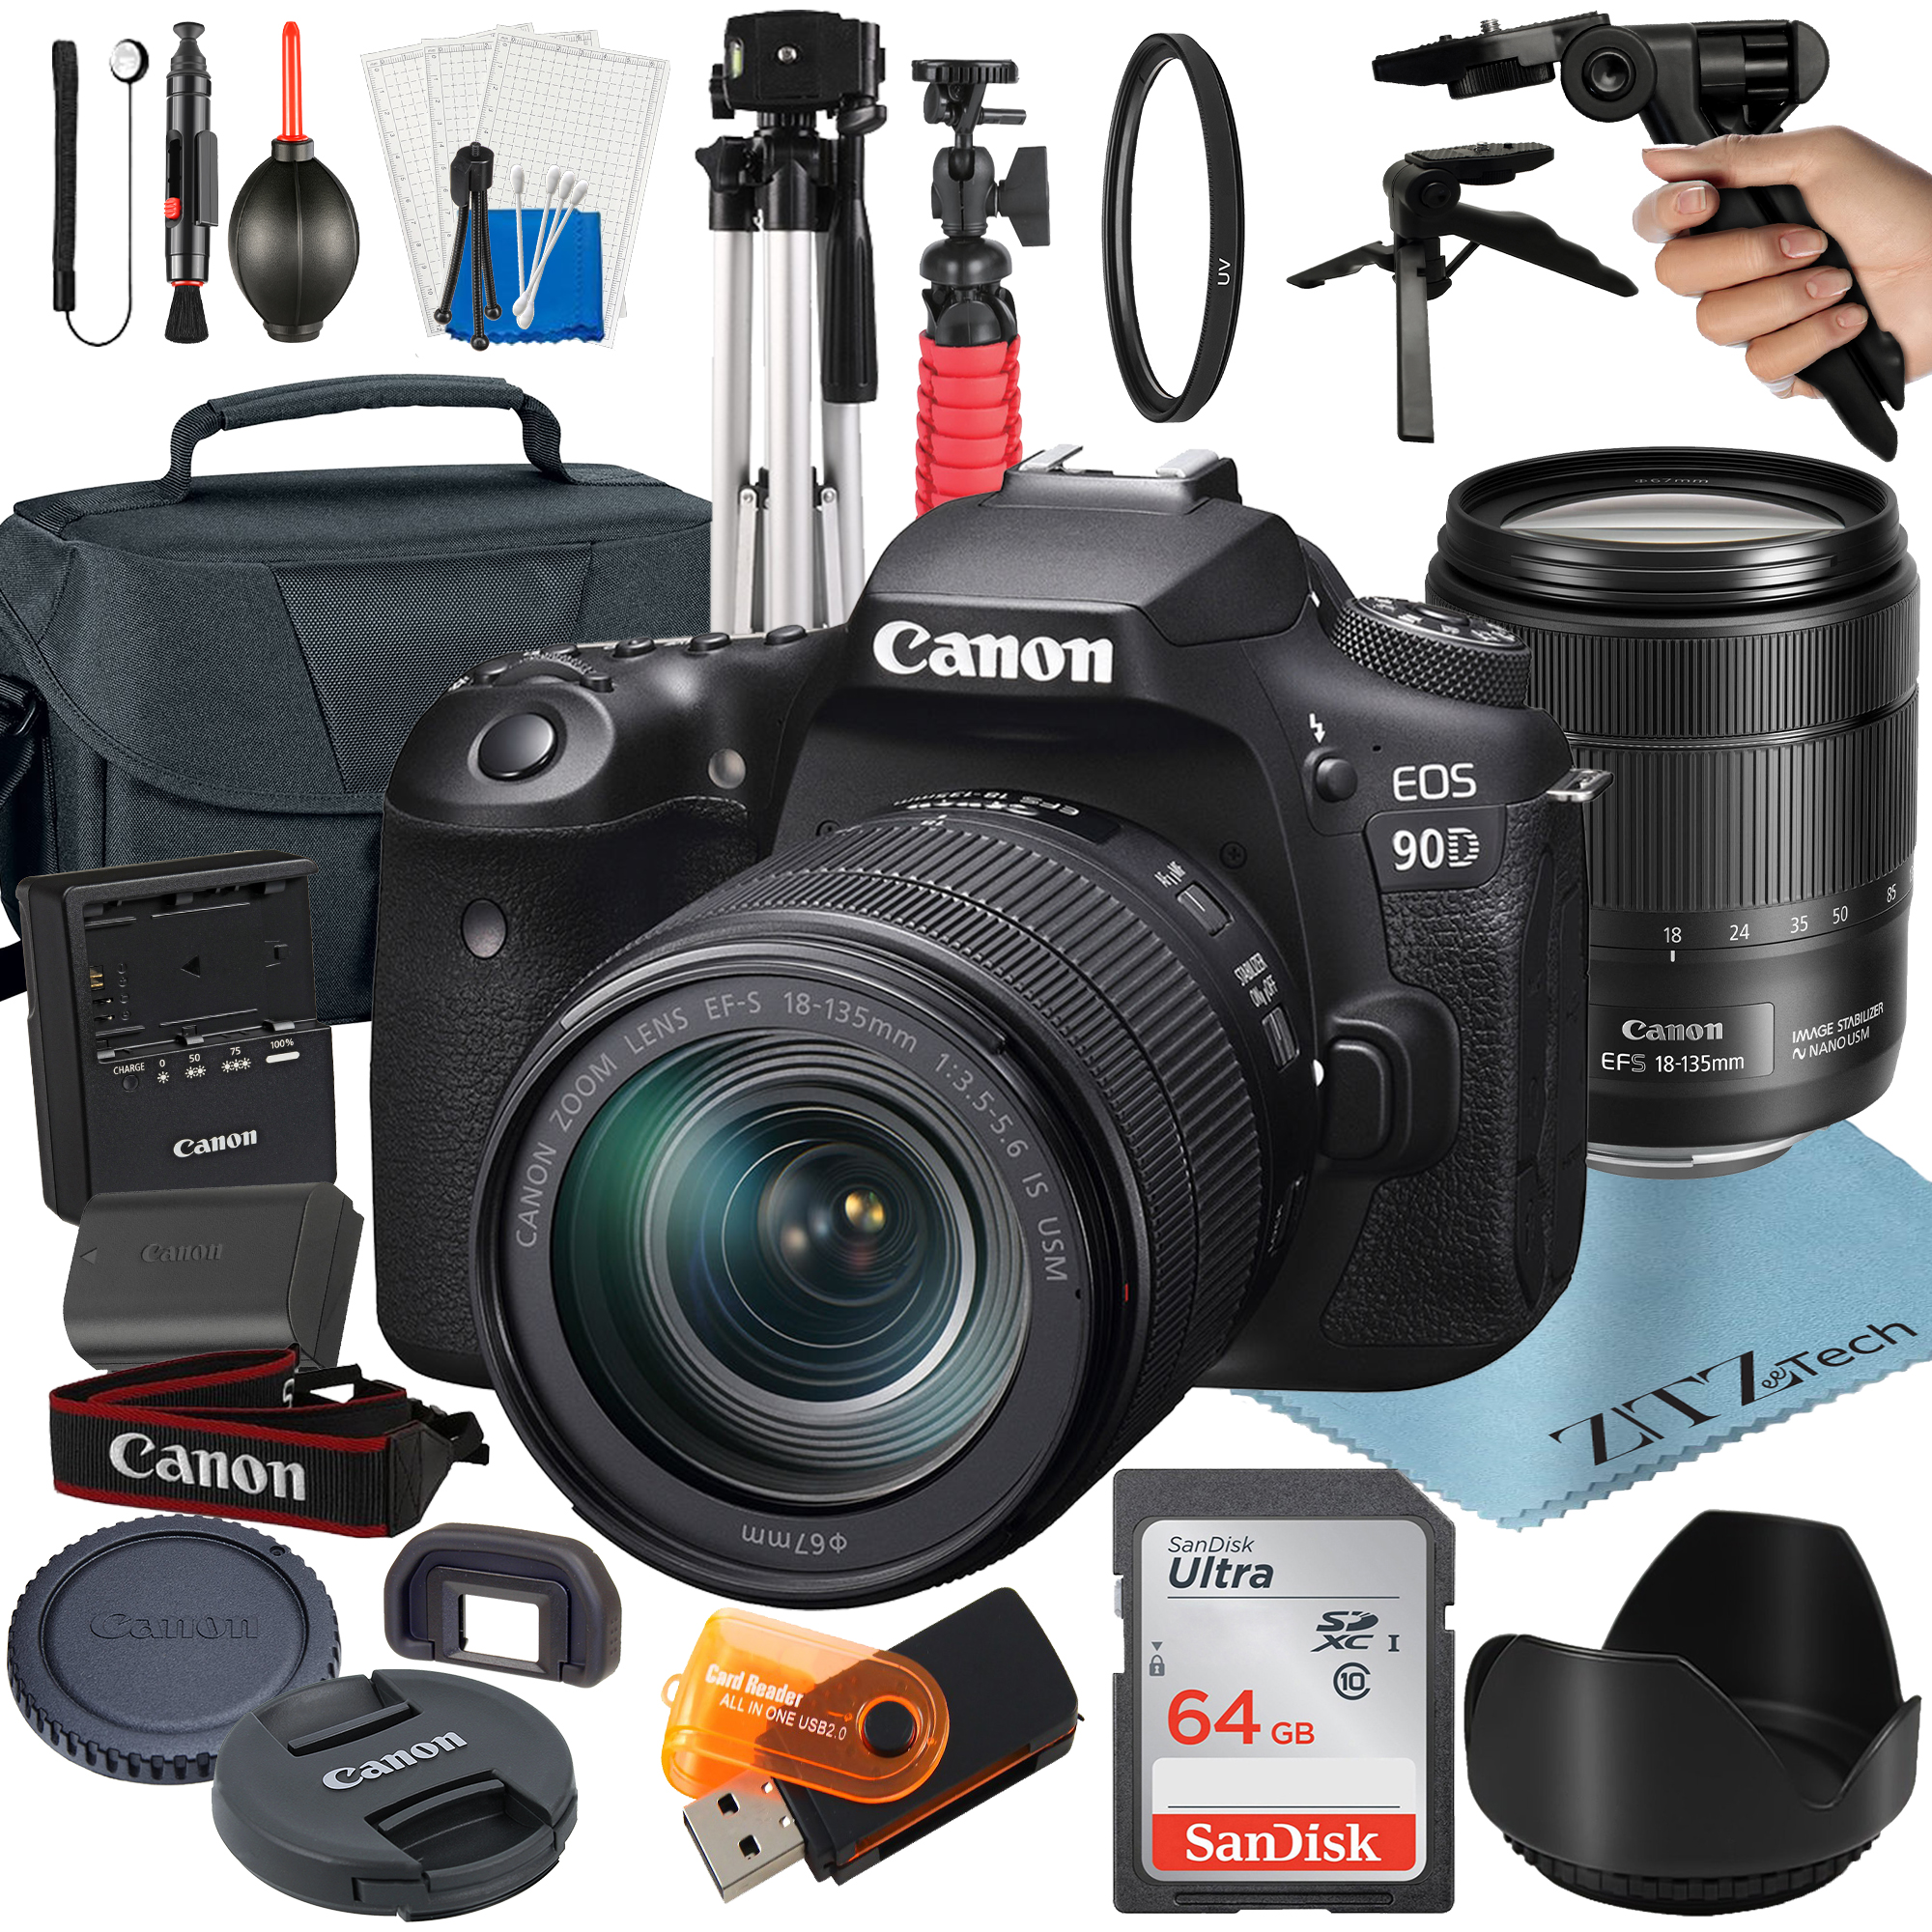 Canon EOS 90D DSLR Camera Bundle with 18-135mm Lens + 64GB SanDisk Card + Case + Tripod + ZeeTech Accessory